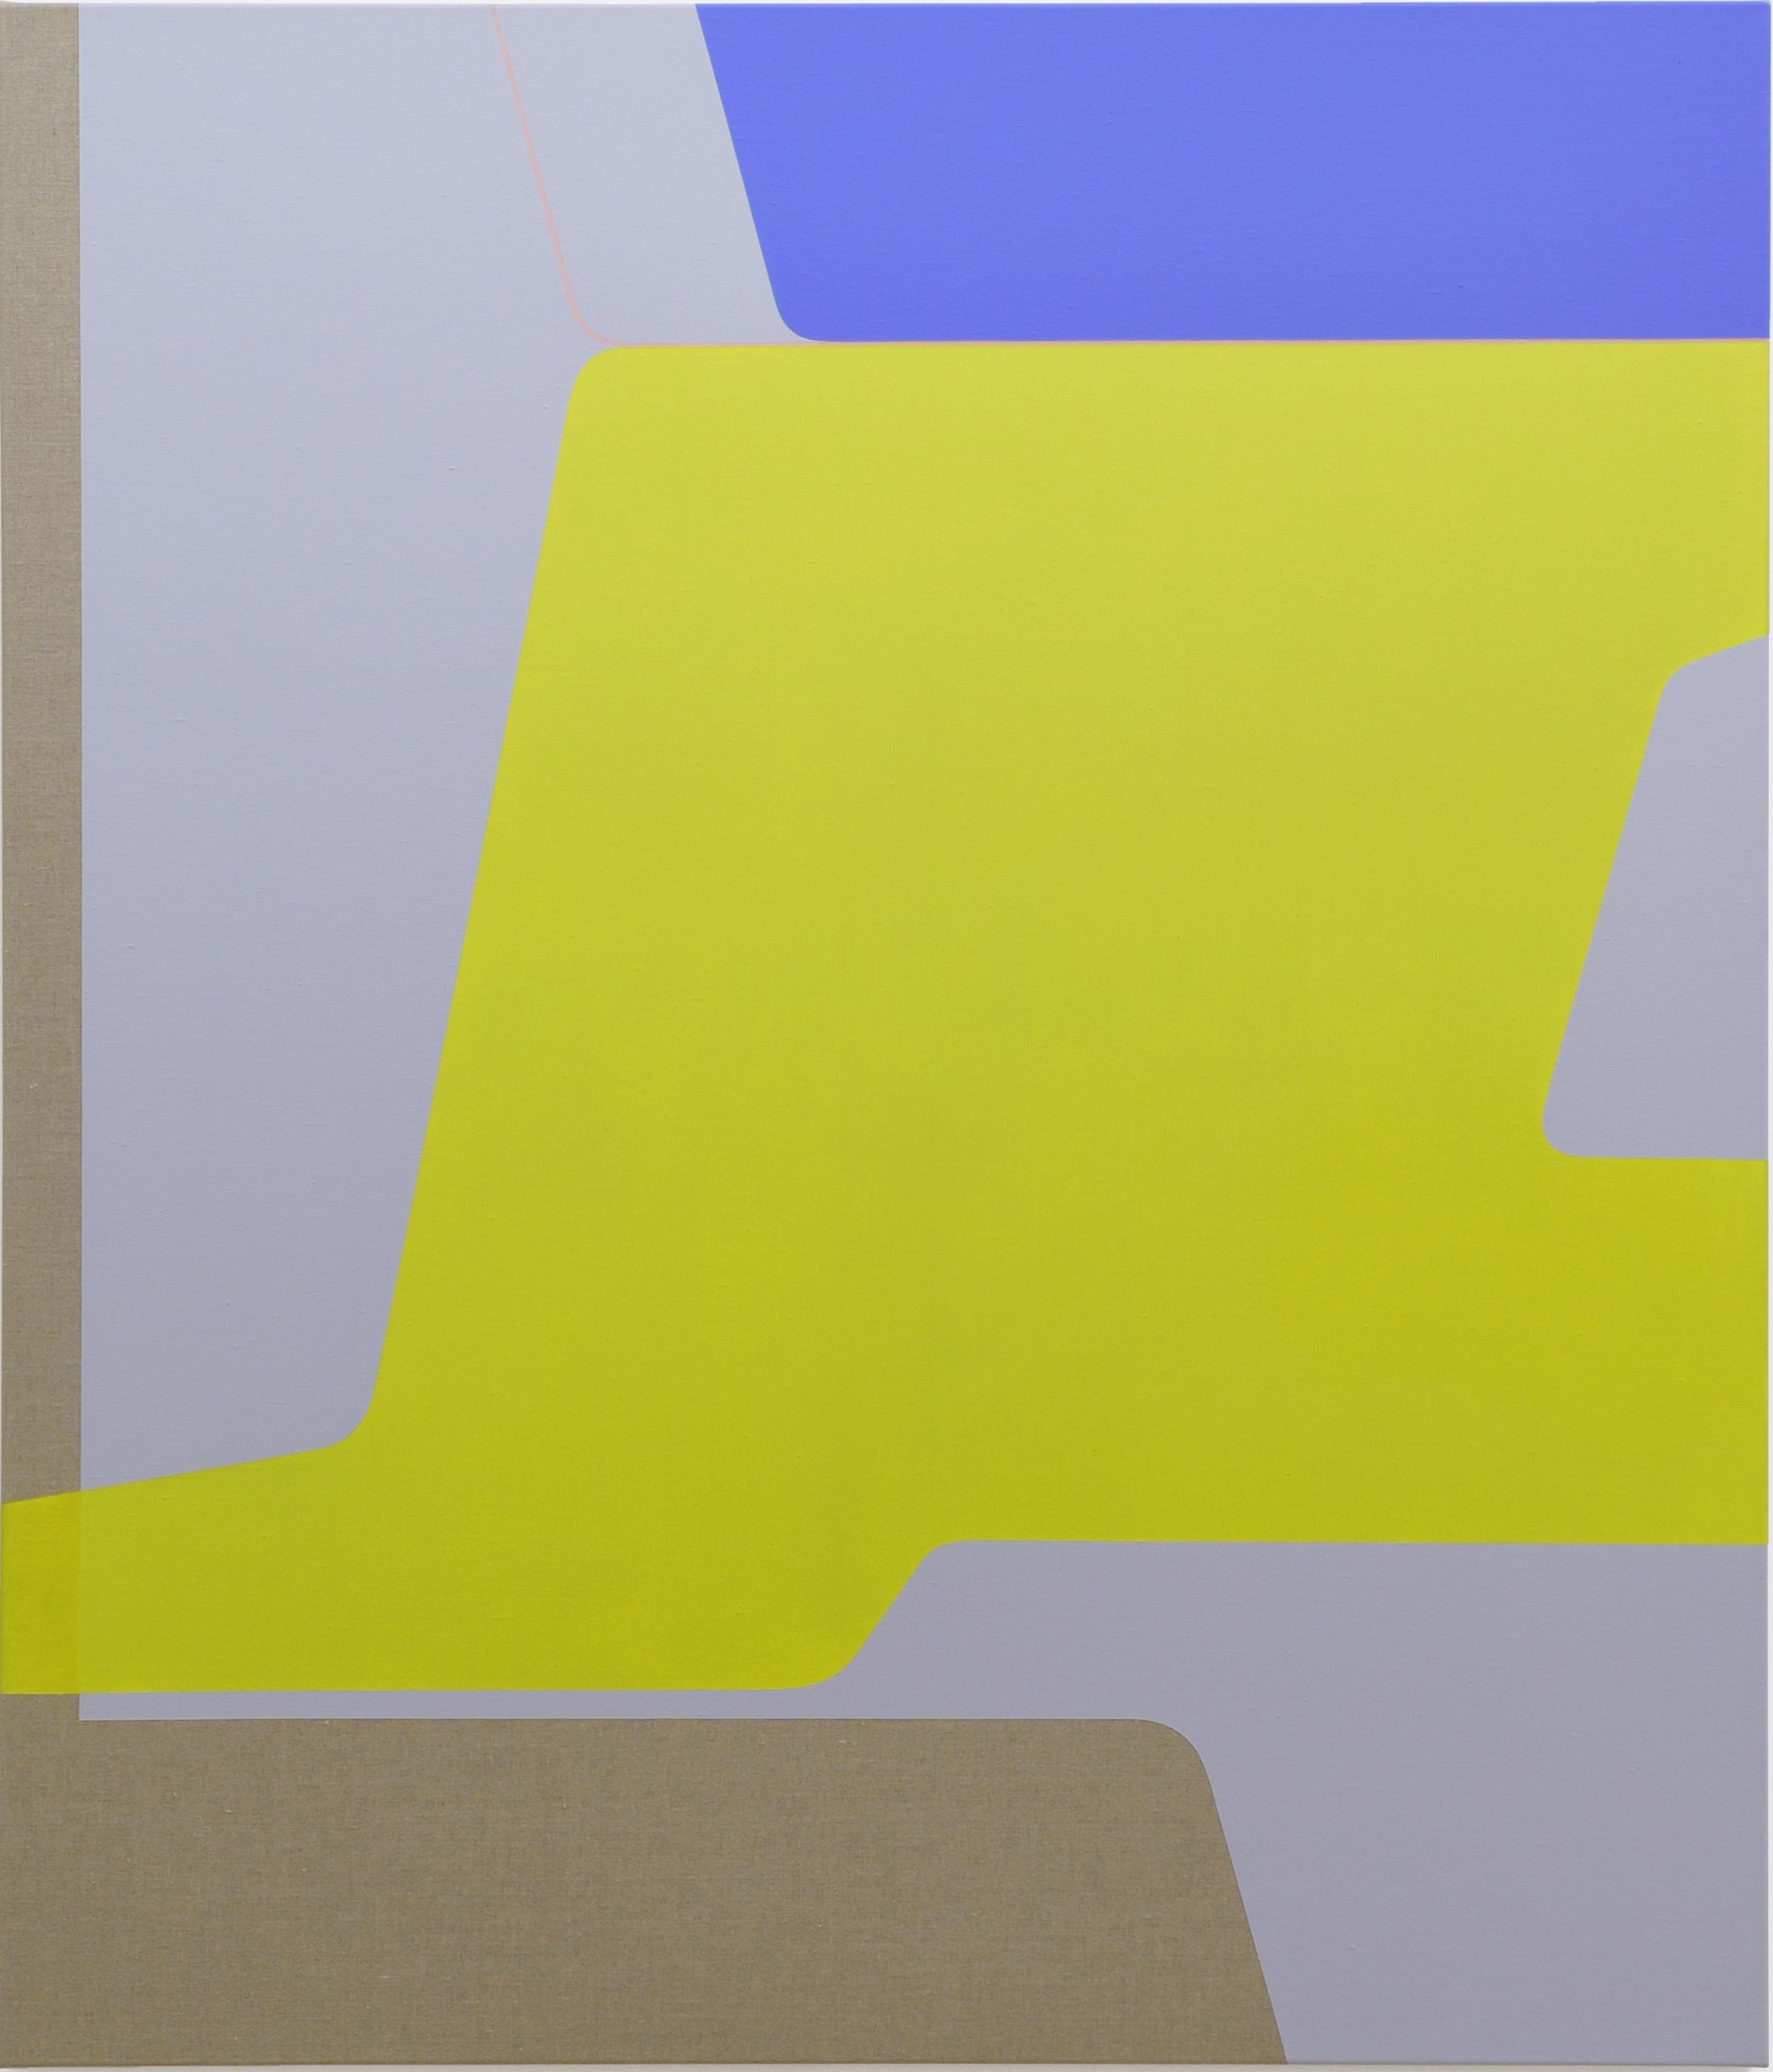 Matthew Browne 'Solas' vinyl tempera and oil on linen 140 x 120cm $14,500